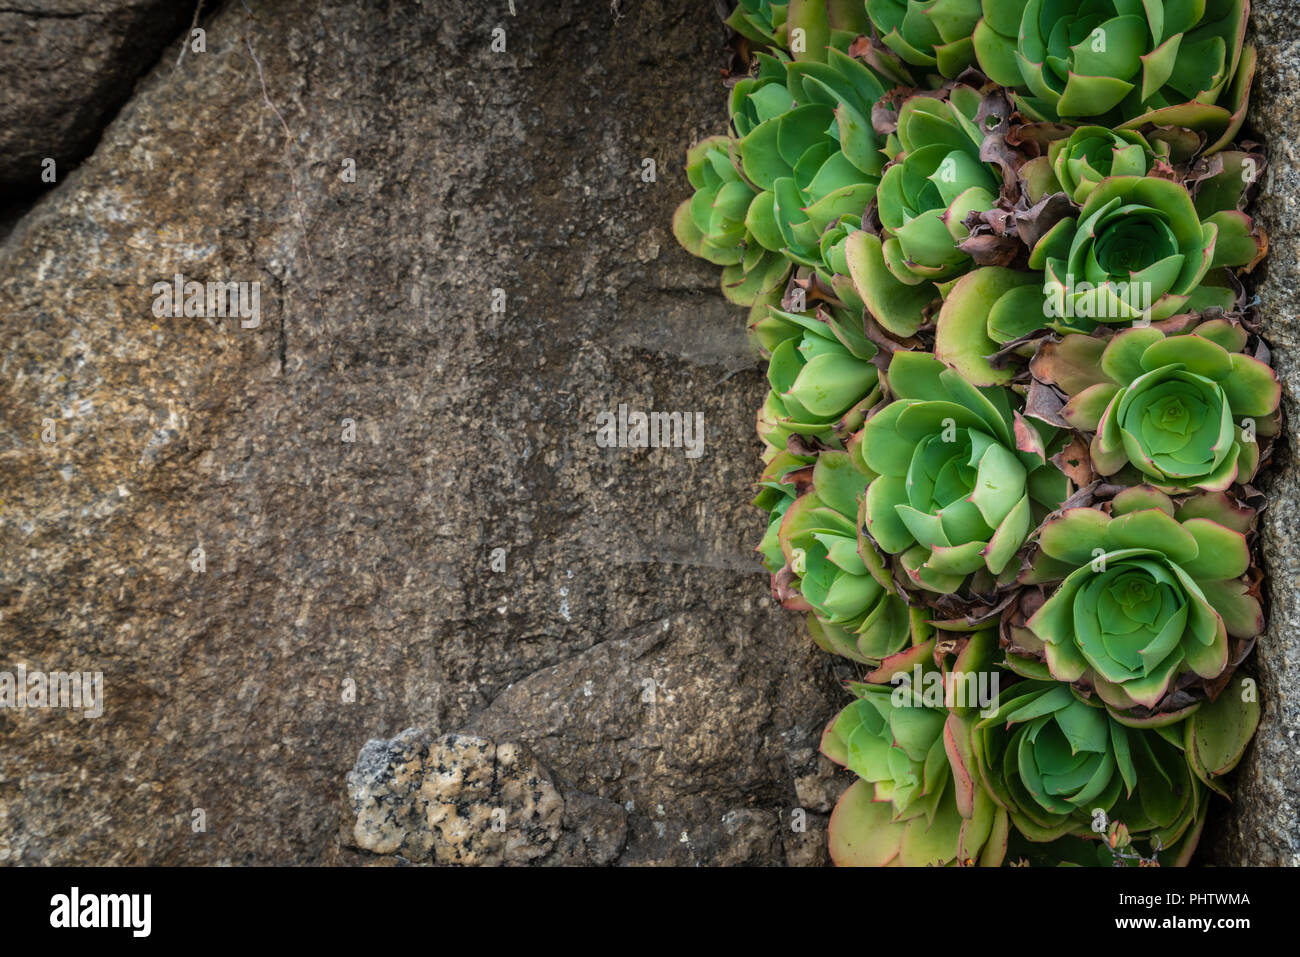 Aeonium succulent plant on a rock Stock Photo